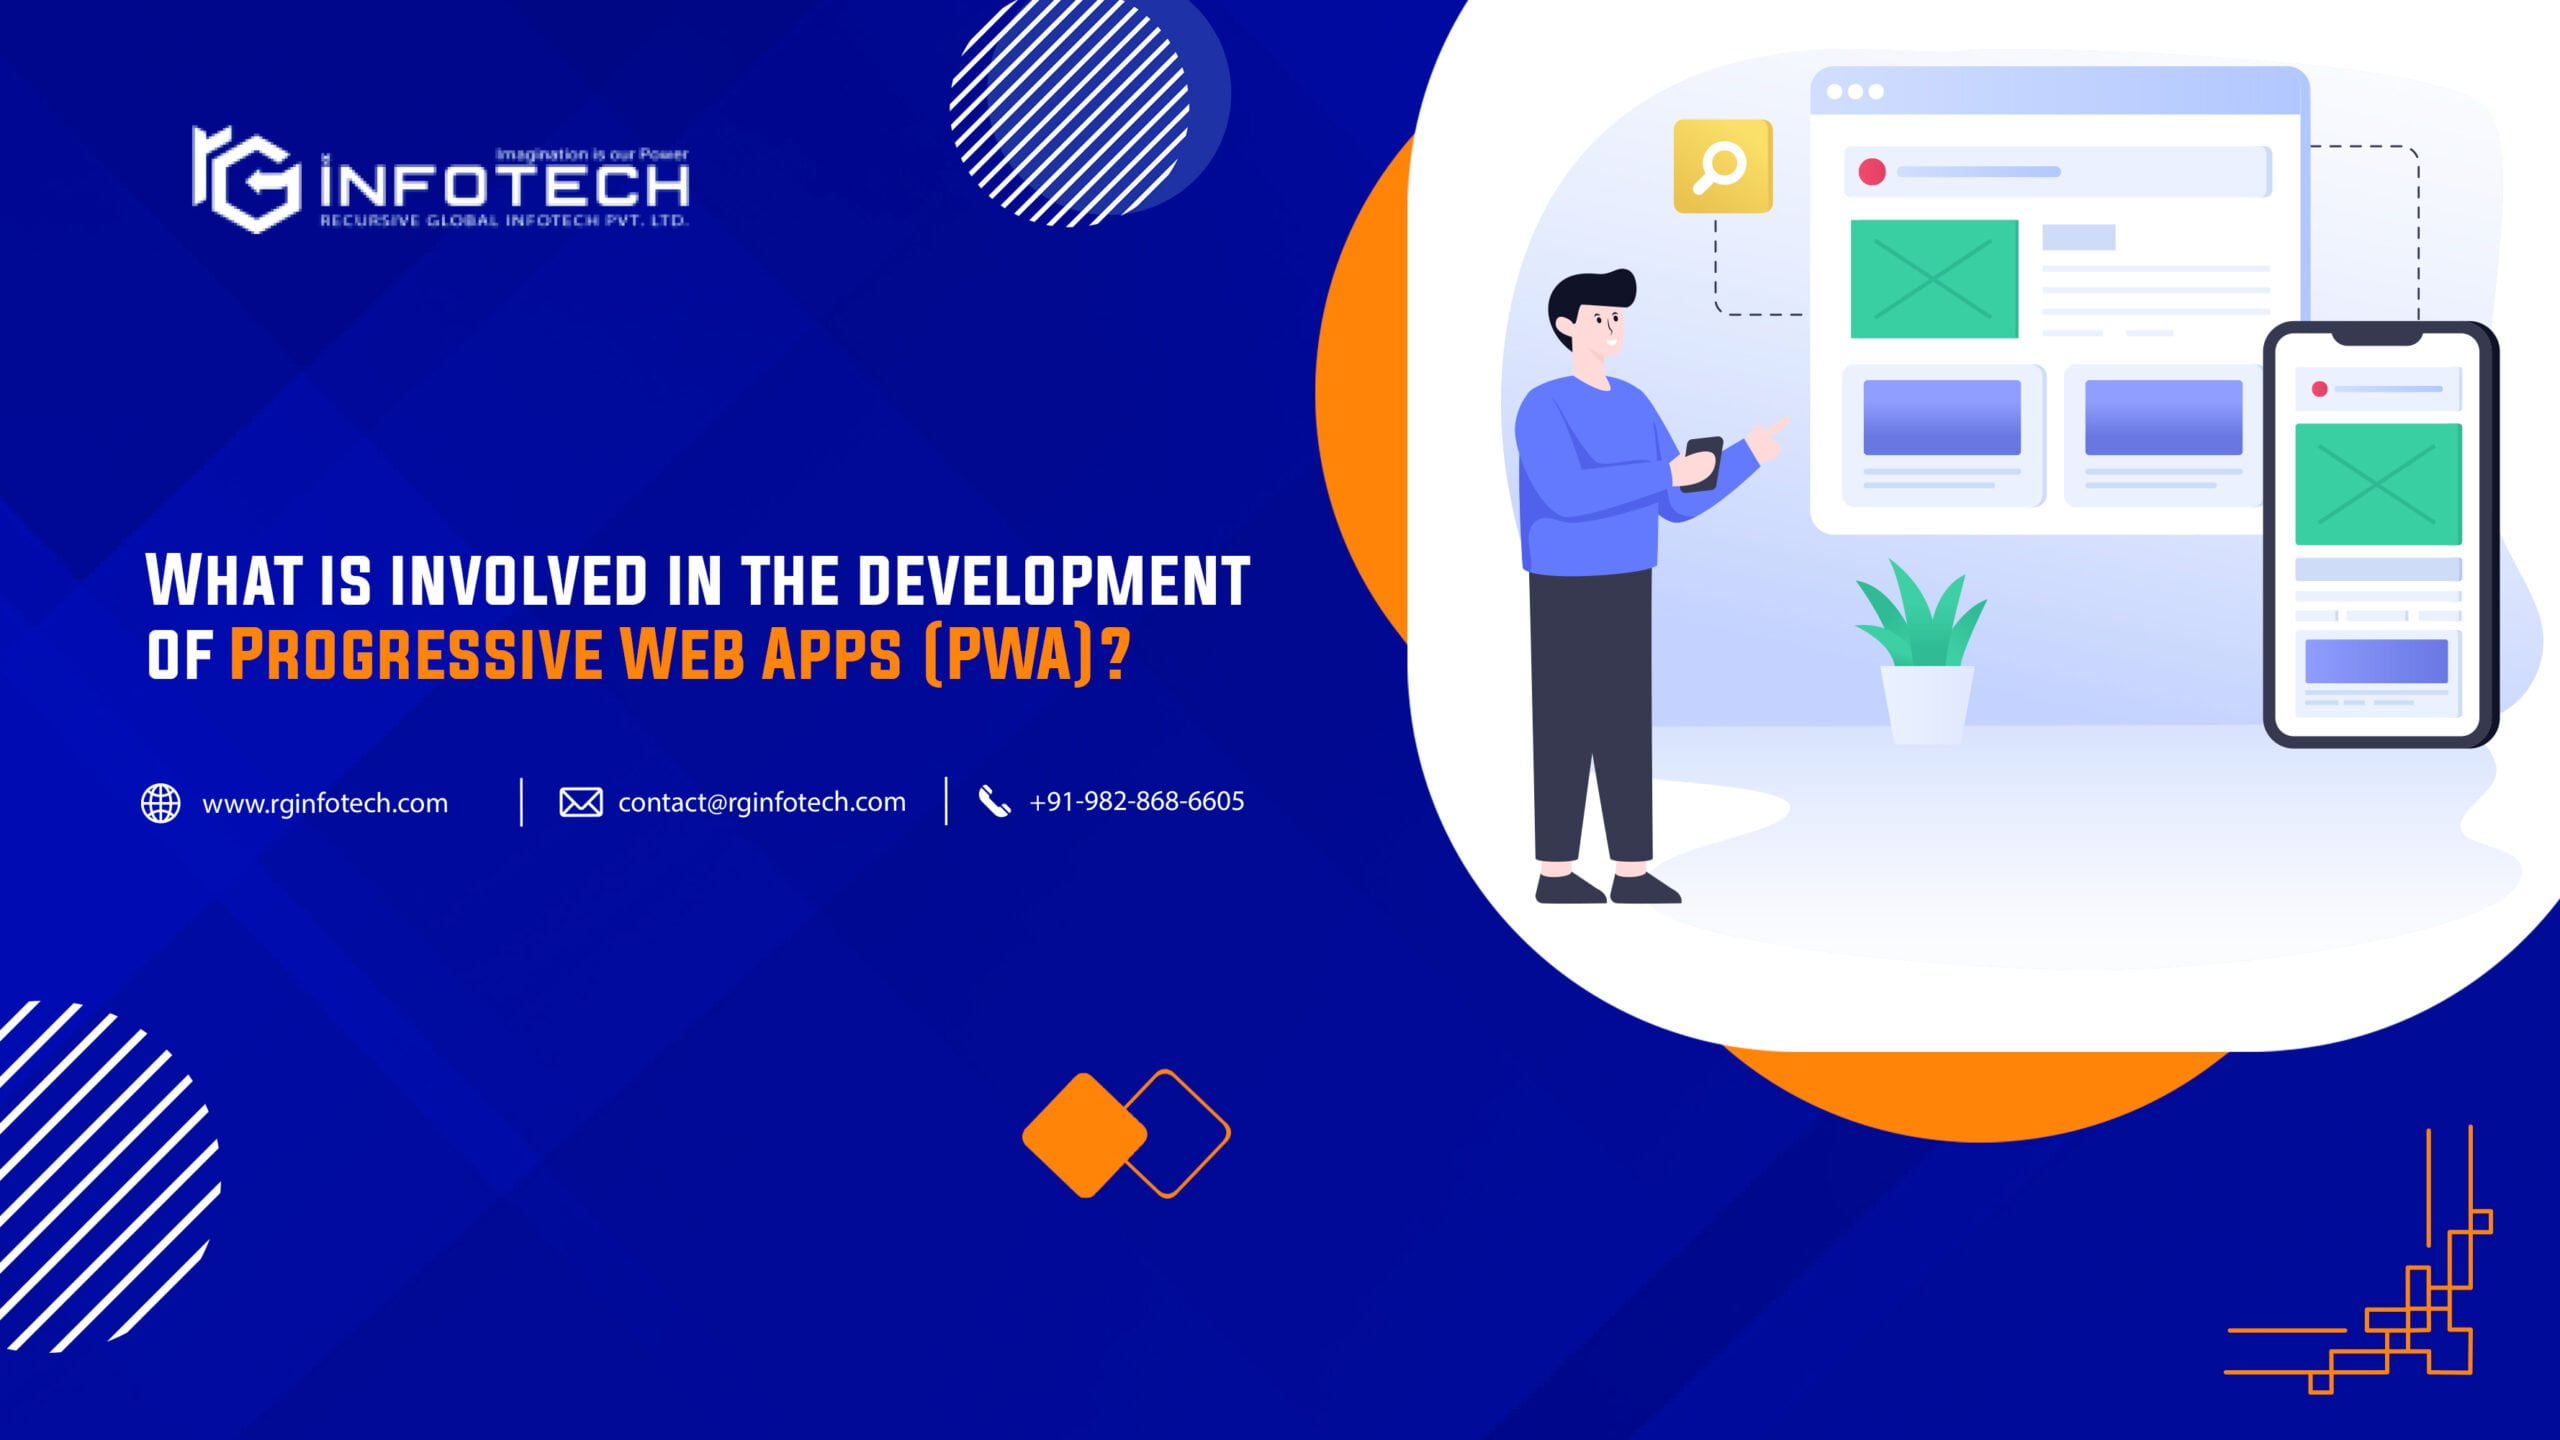 What are the major elements of a Progressive Web App (PWA)?